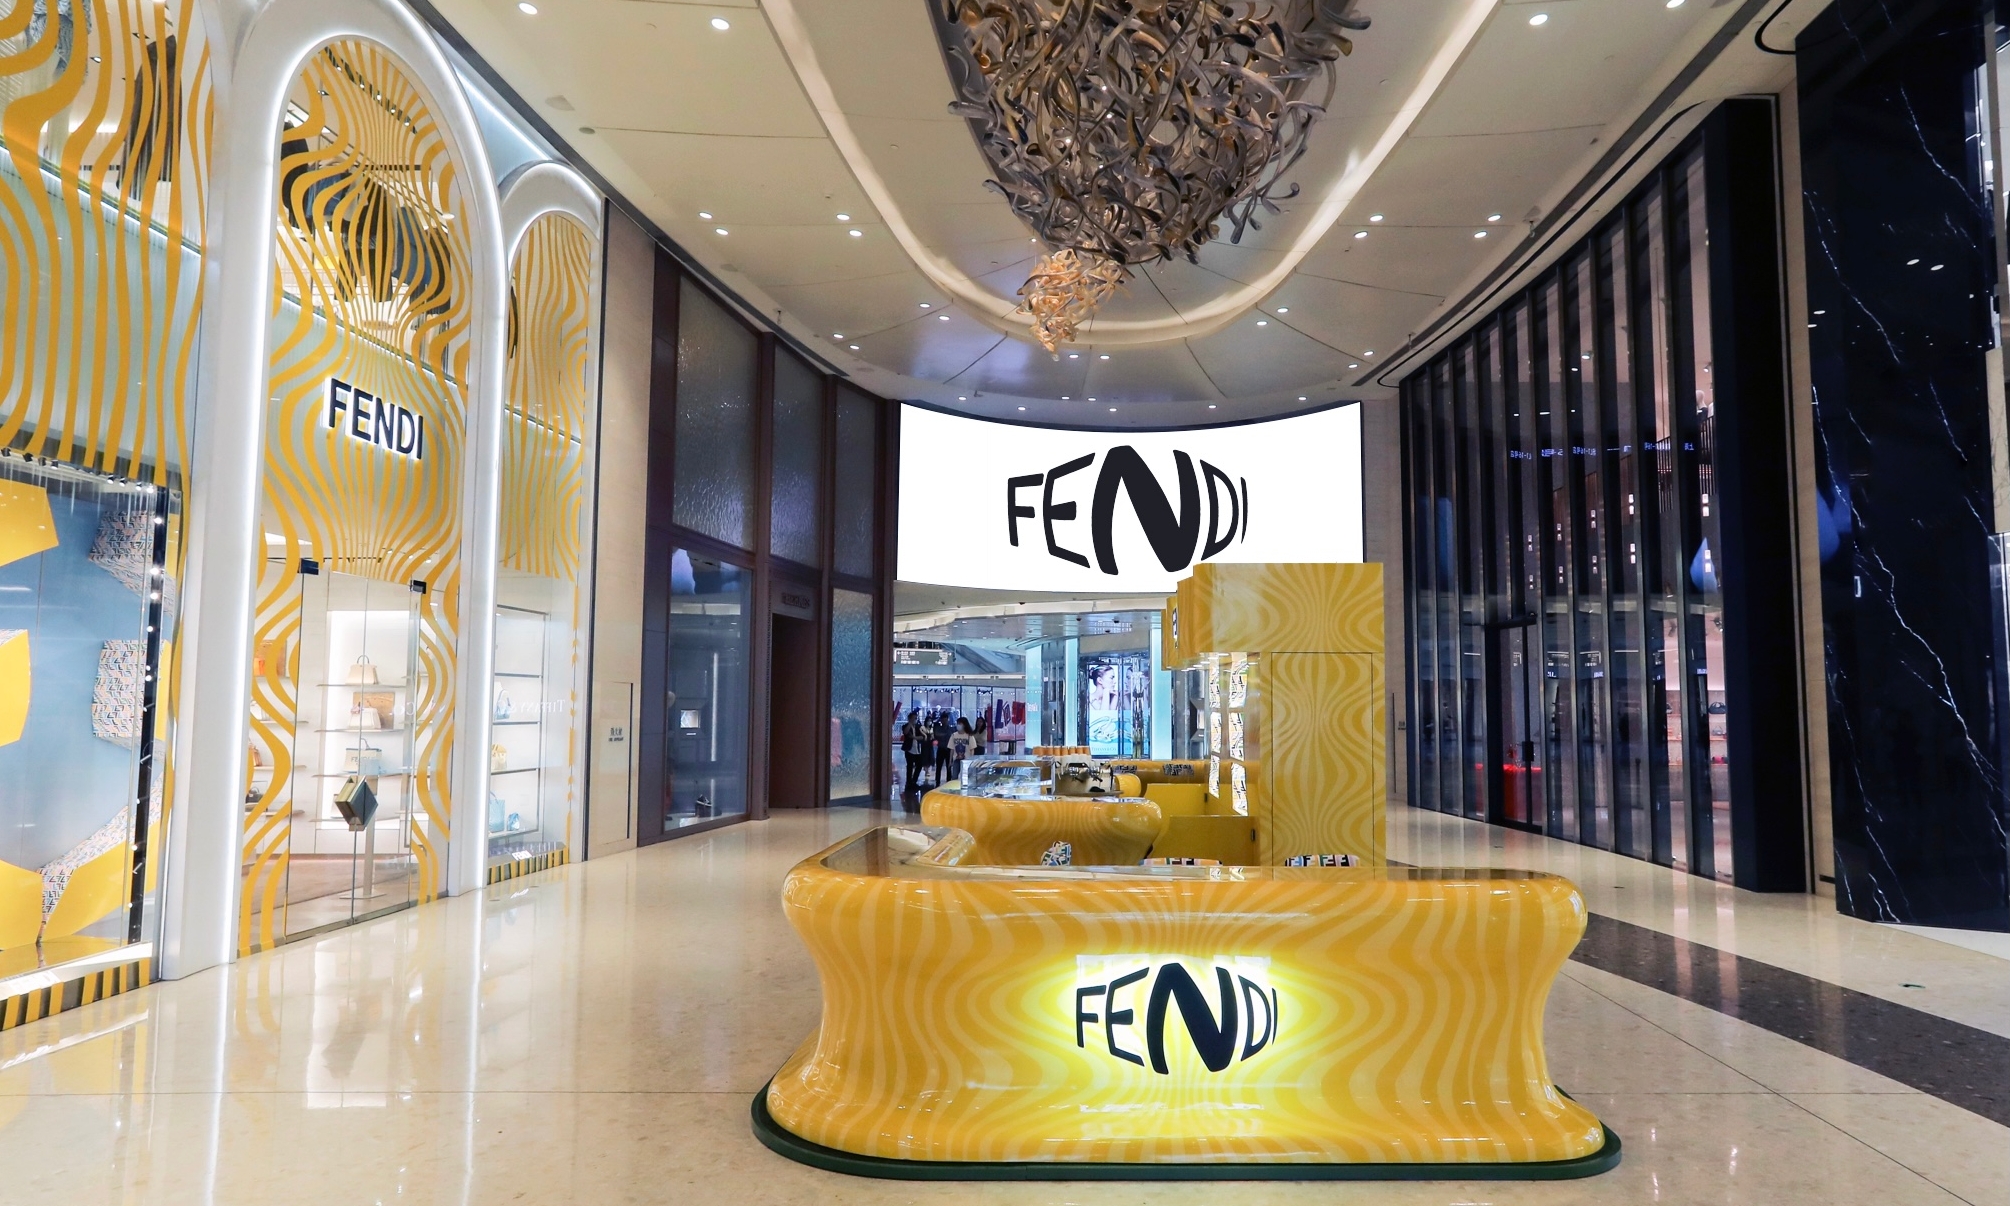 Lady M 携手 FENDI 呈献「FENDI CAFFE」限时体验空间